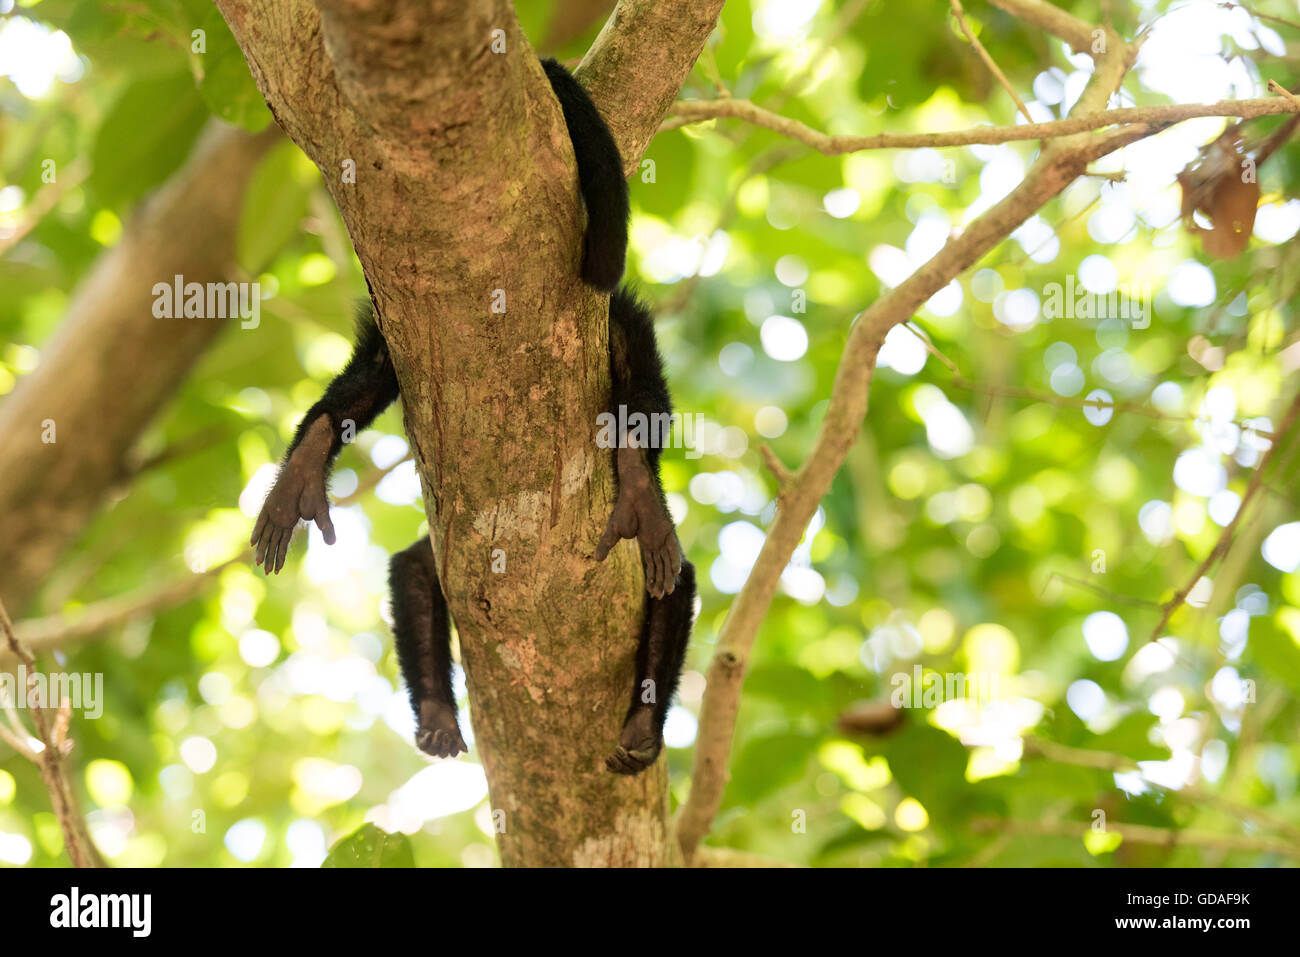 Costa Rica, Puntarenas, Quepos, Manuel Antonio National Park, White-faced Capuchin monkey hanging on a tree, Cebus capucinus, Cara blanca Stock Photo